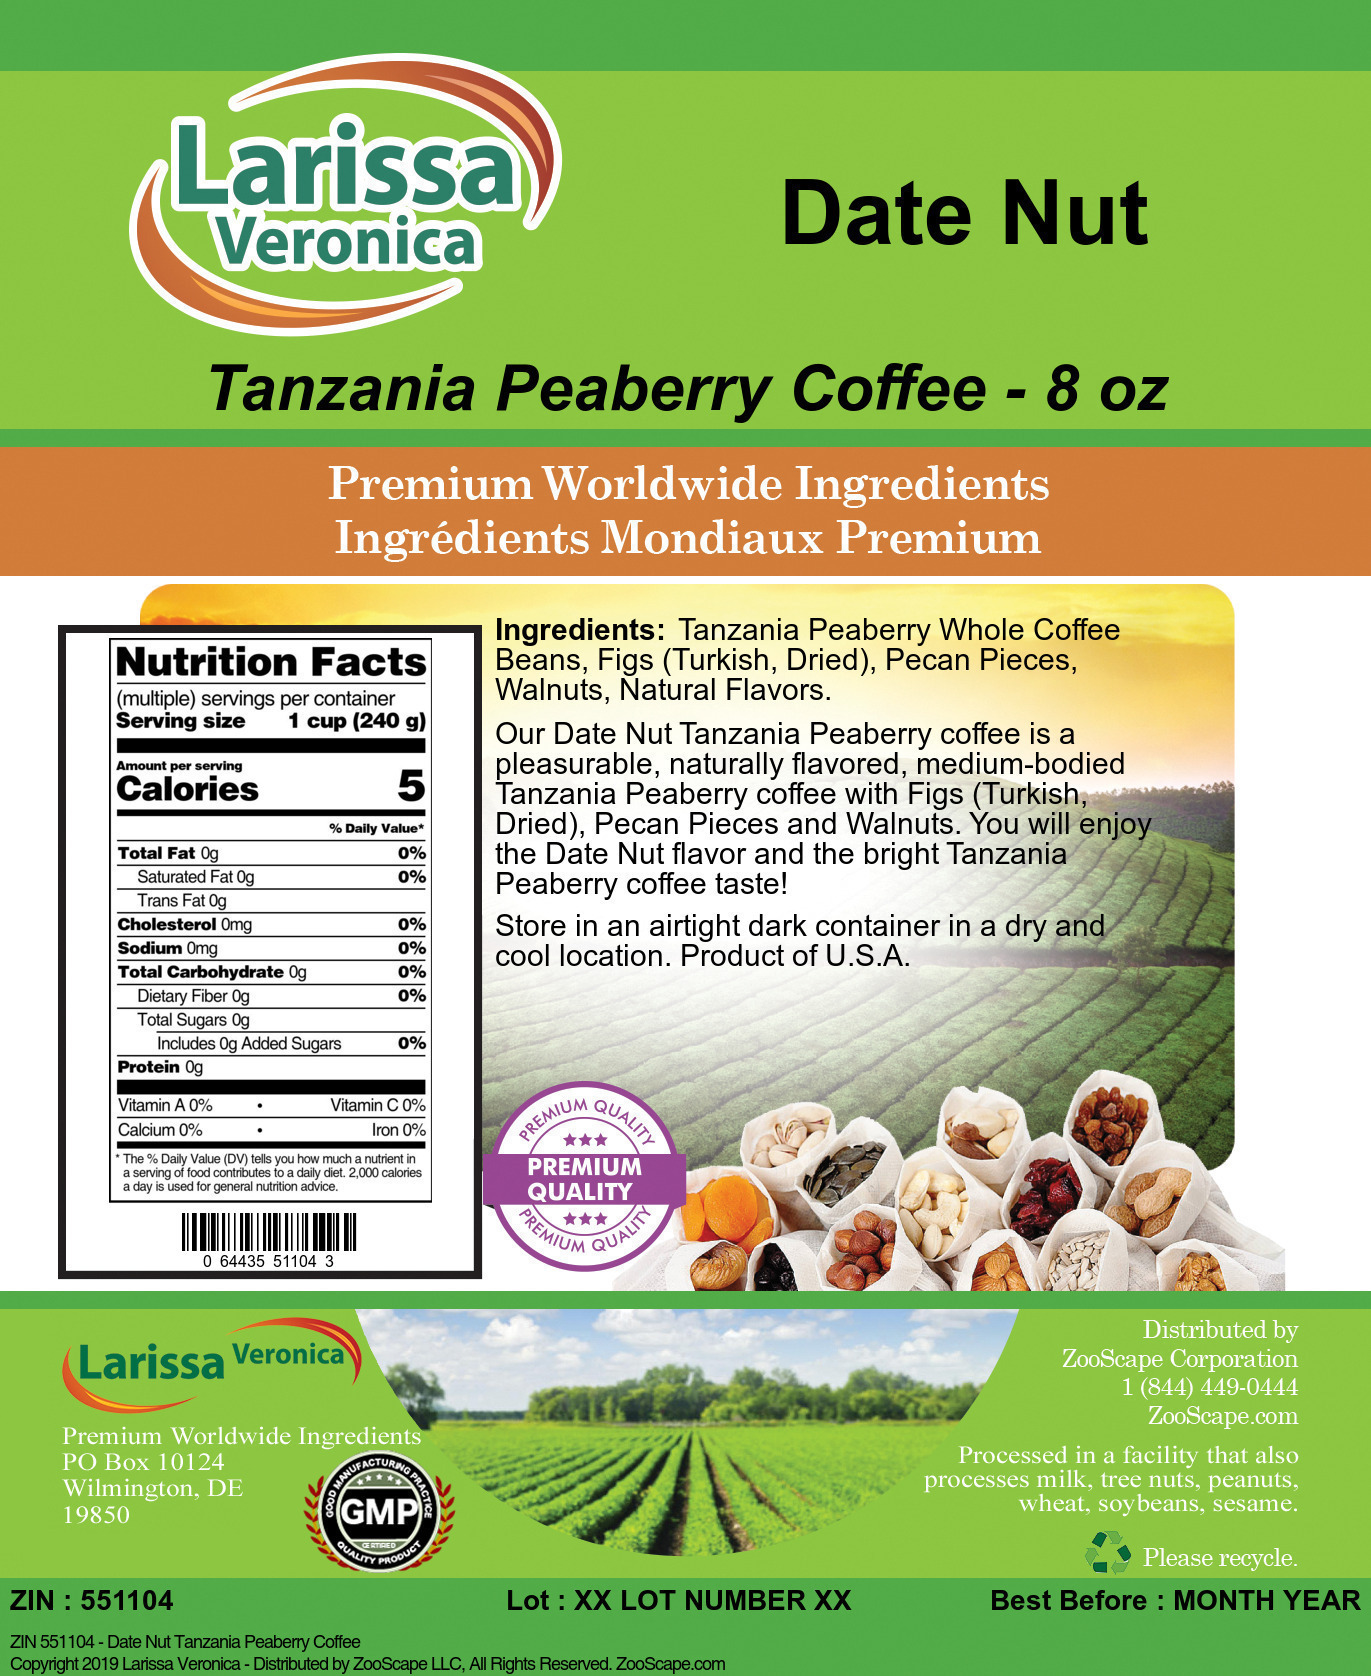 Date Nut Tanzania Peaberry Coffee - Label